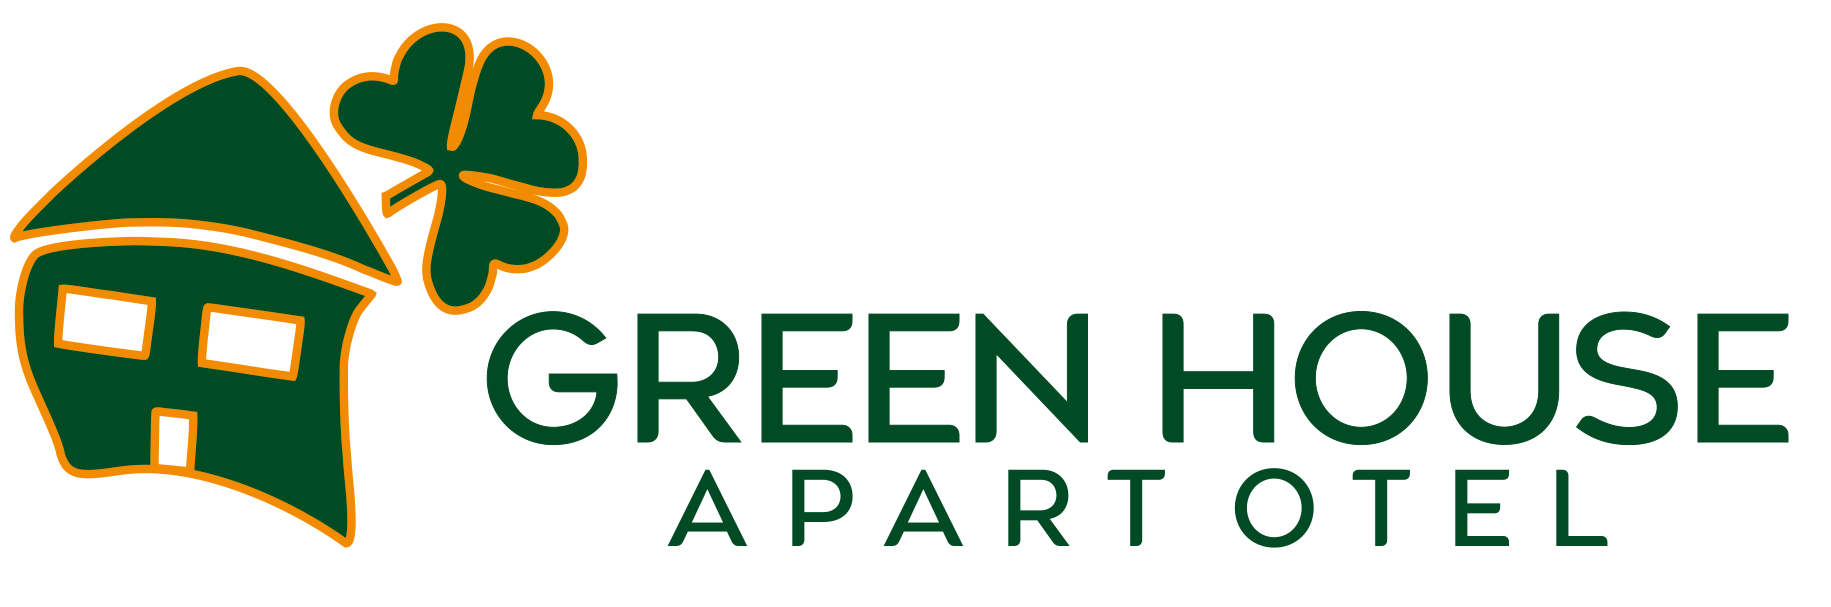 Green House Apart Otel